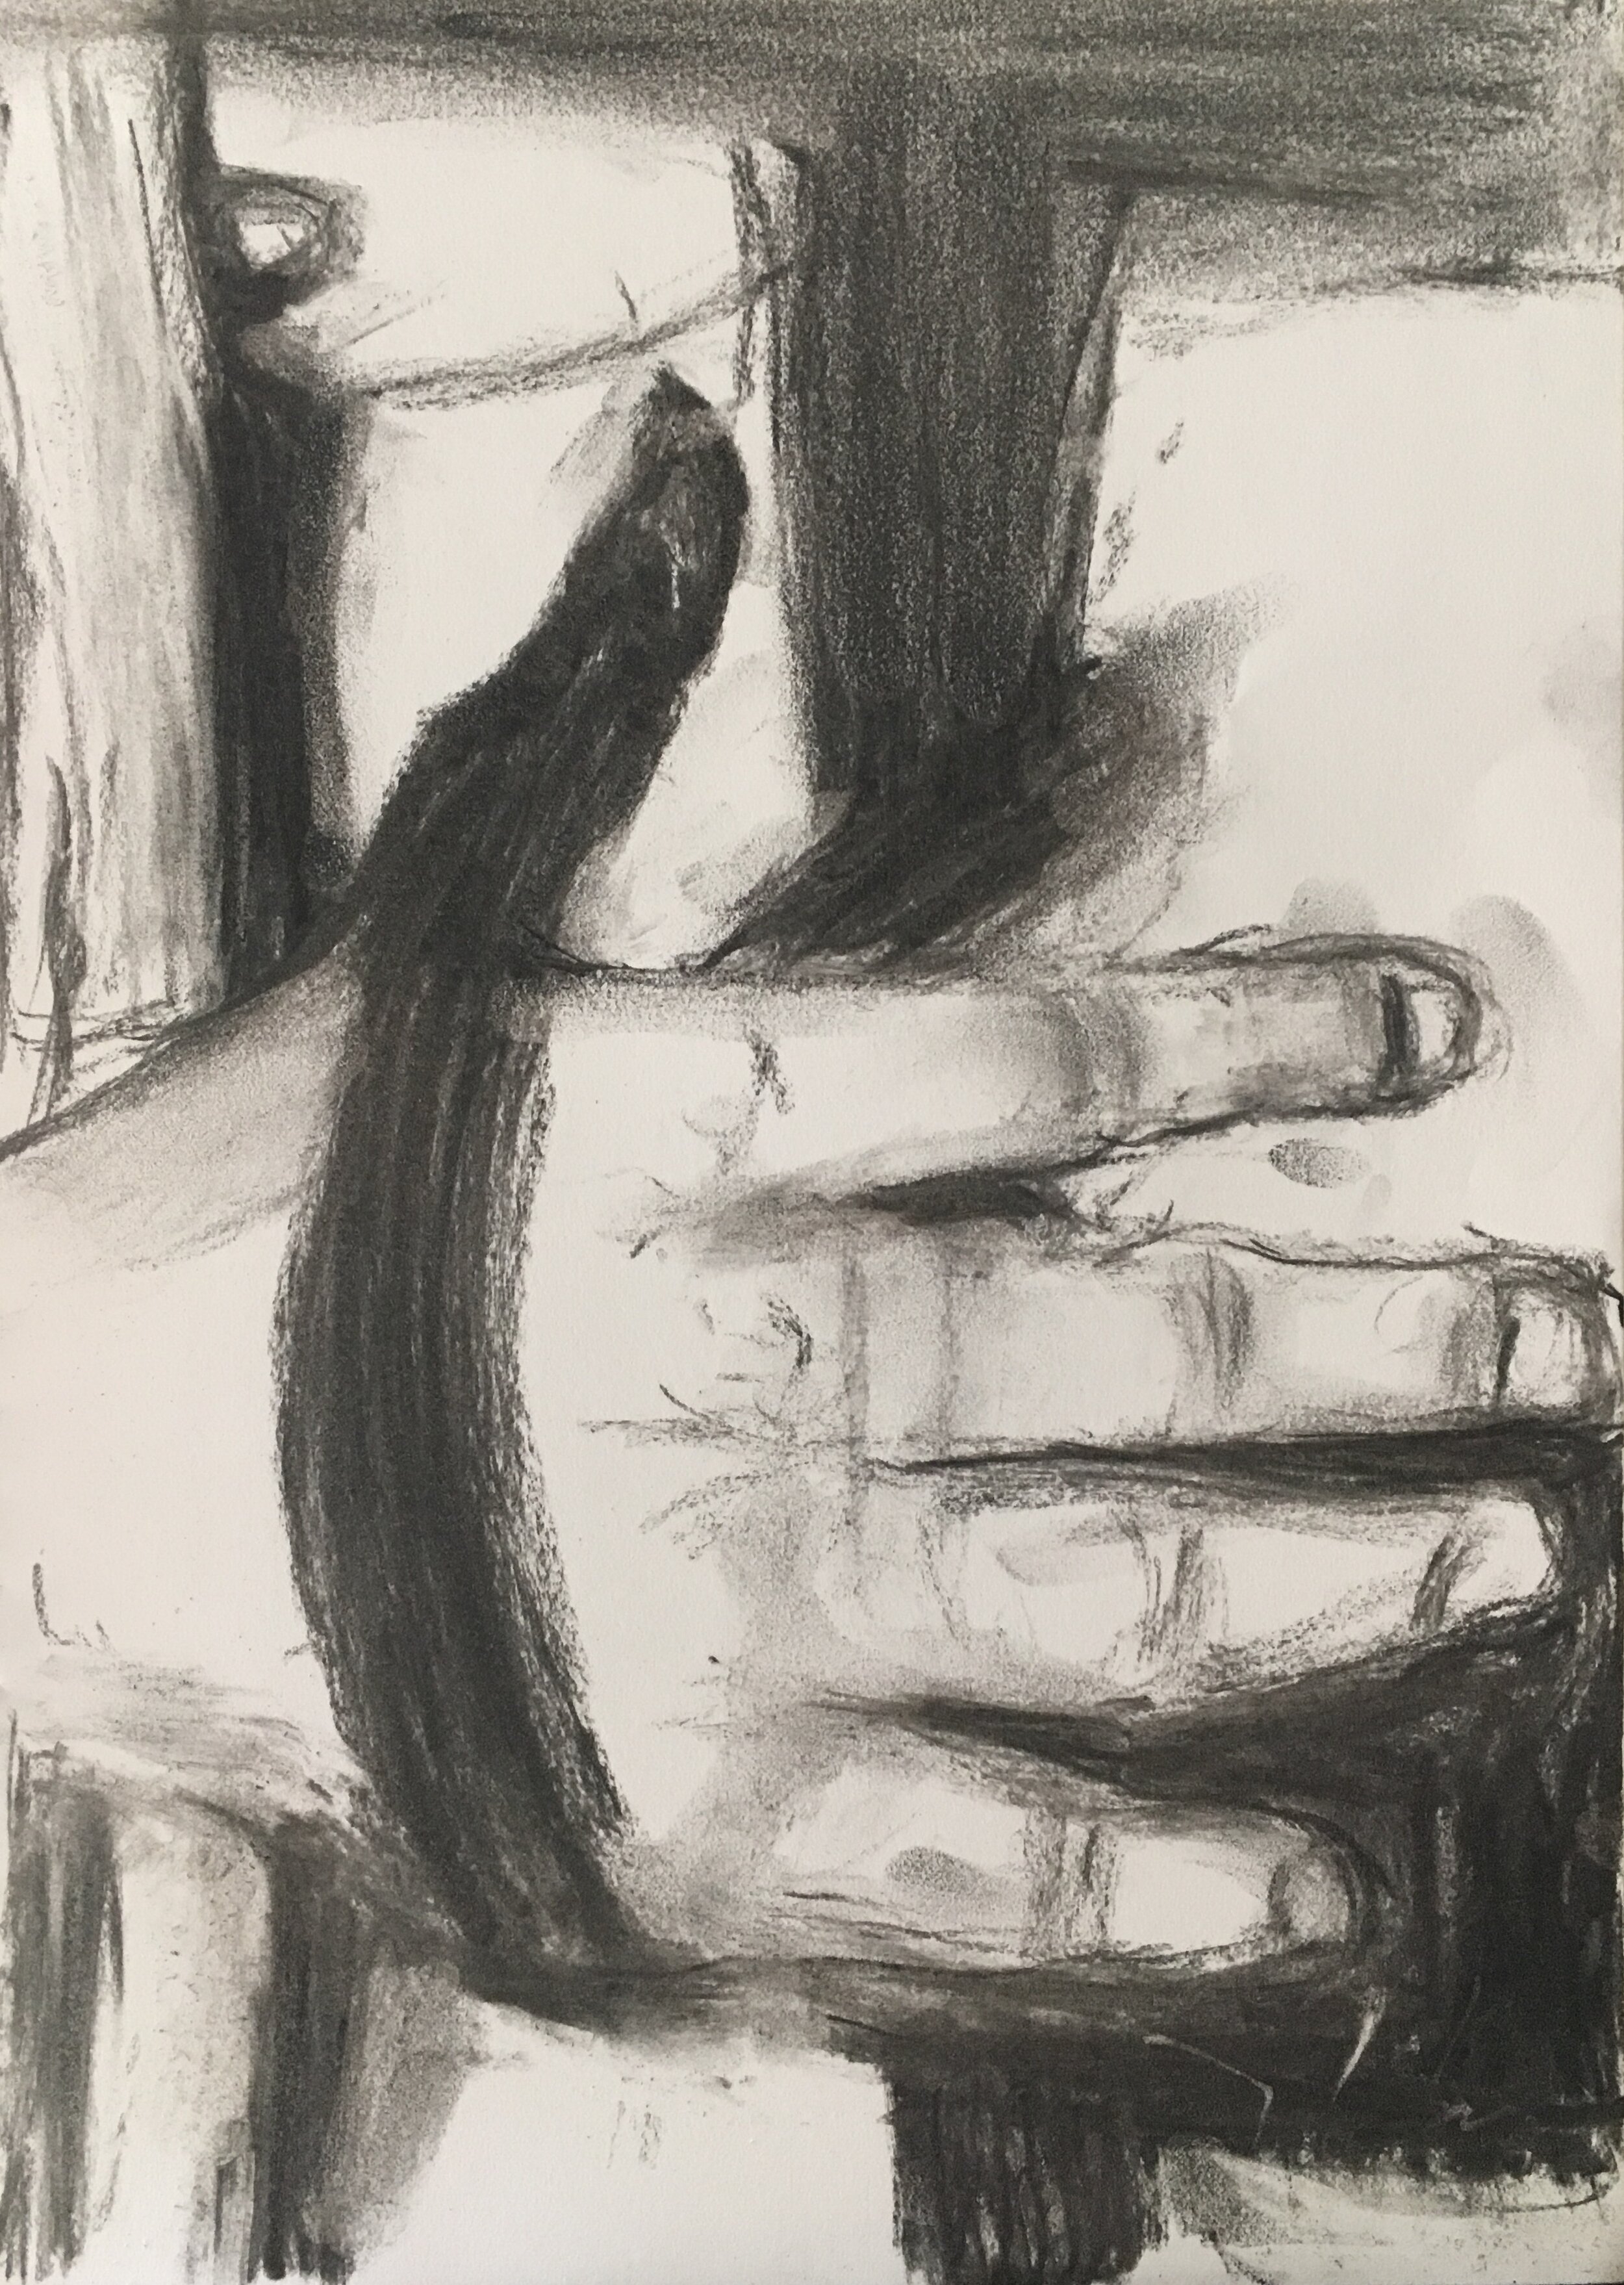 Hand, torso, linen, shadow (07 May 2020)